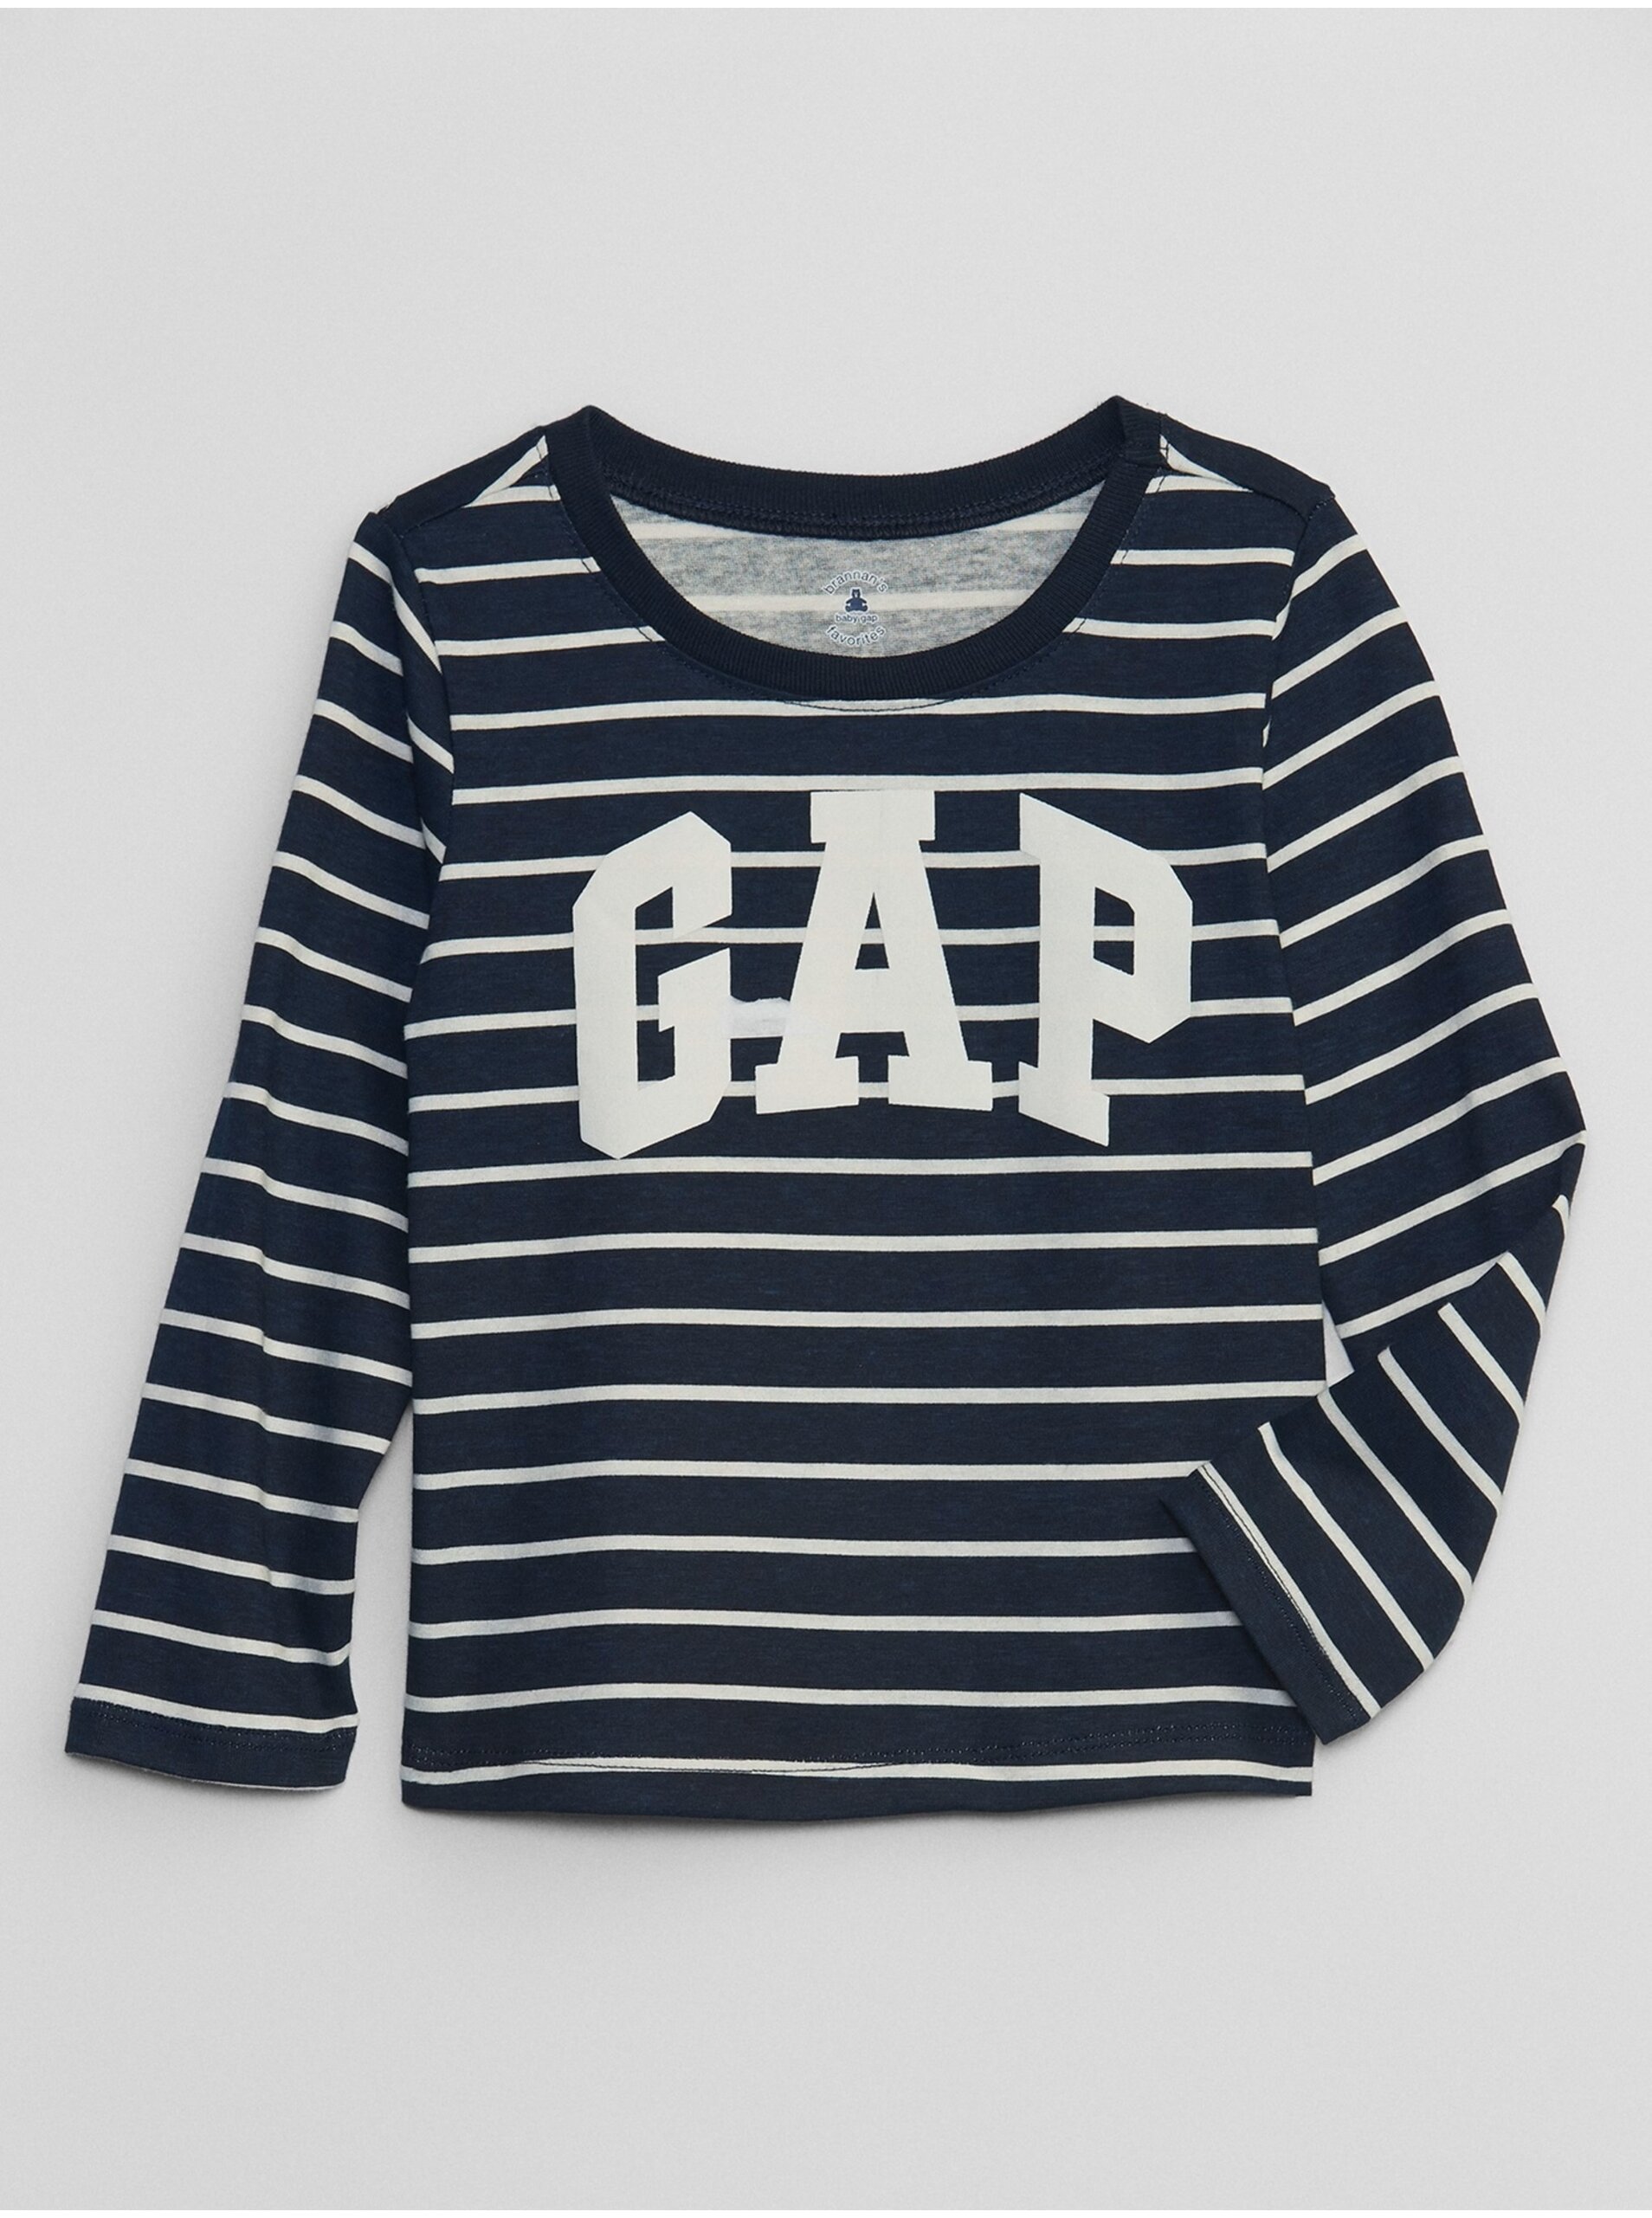 Lacno Tmavomodré dievčenské pruhované tričko GAP